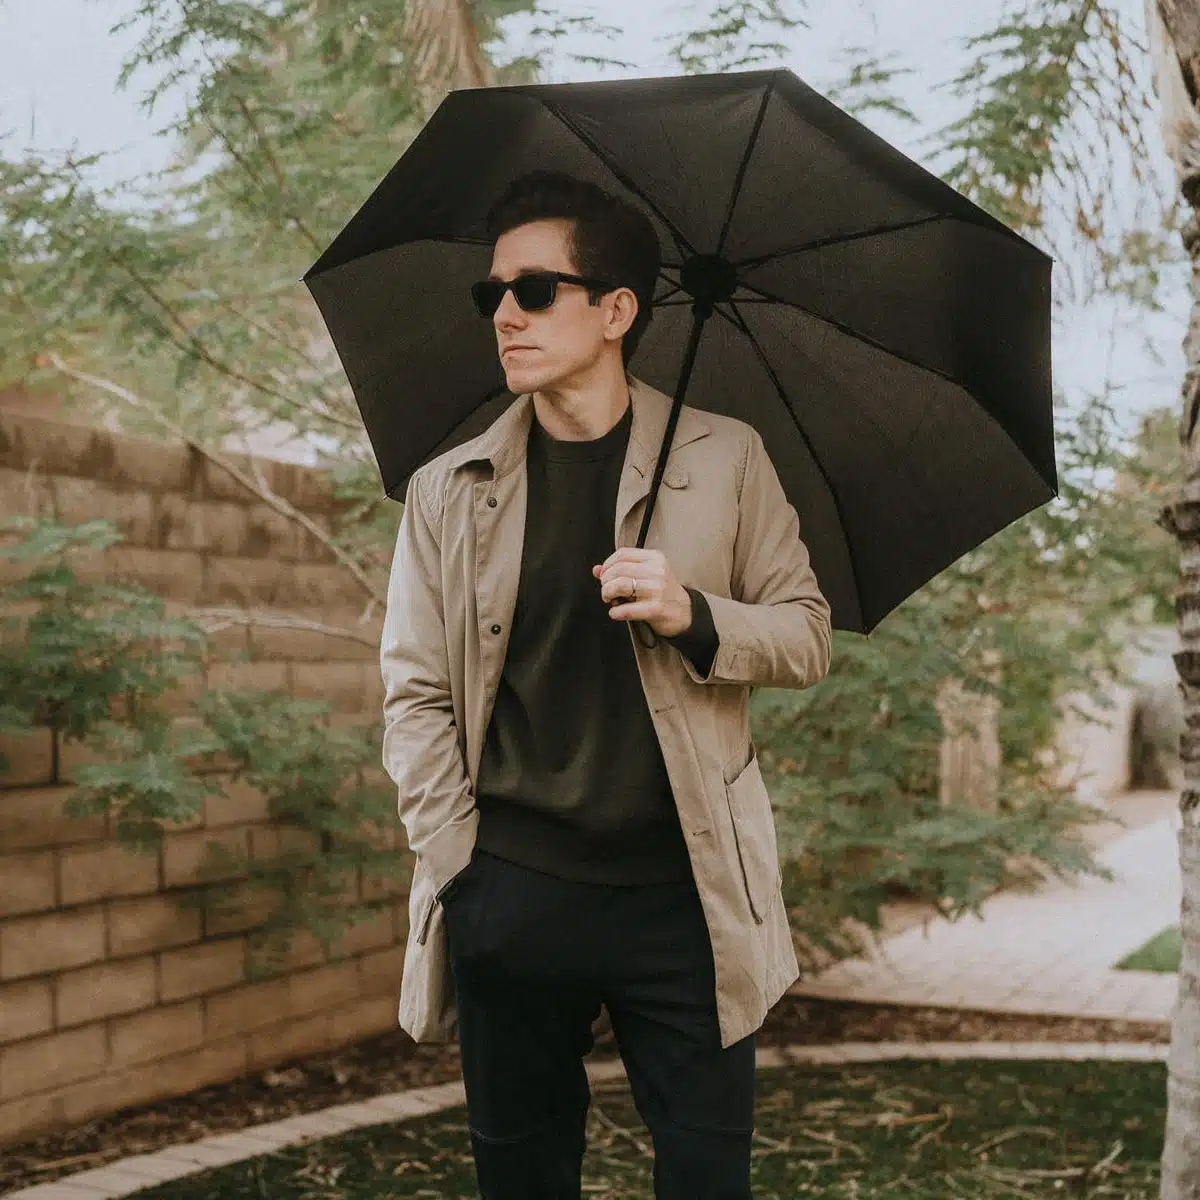 Brock in a Raincoat holding an Umbrella